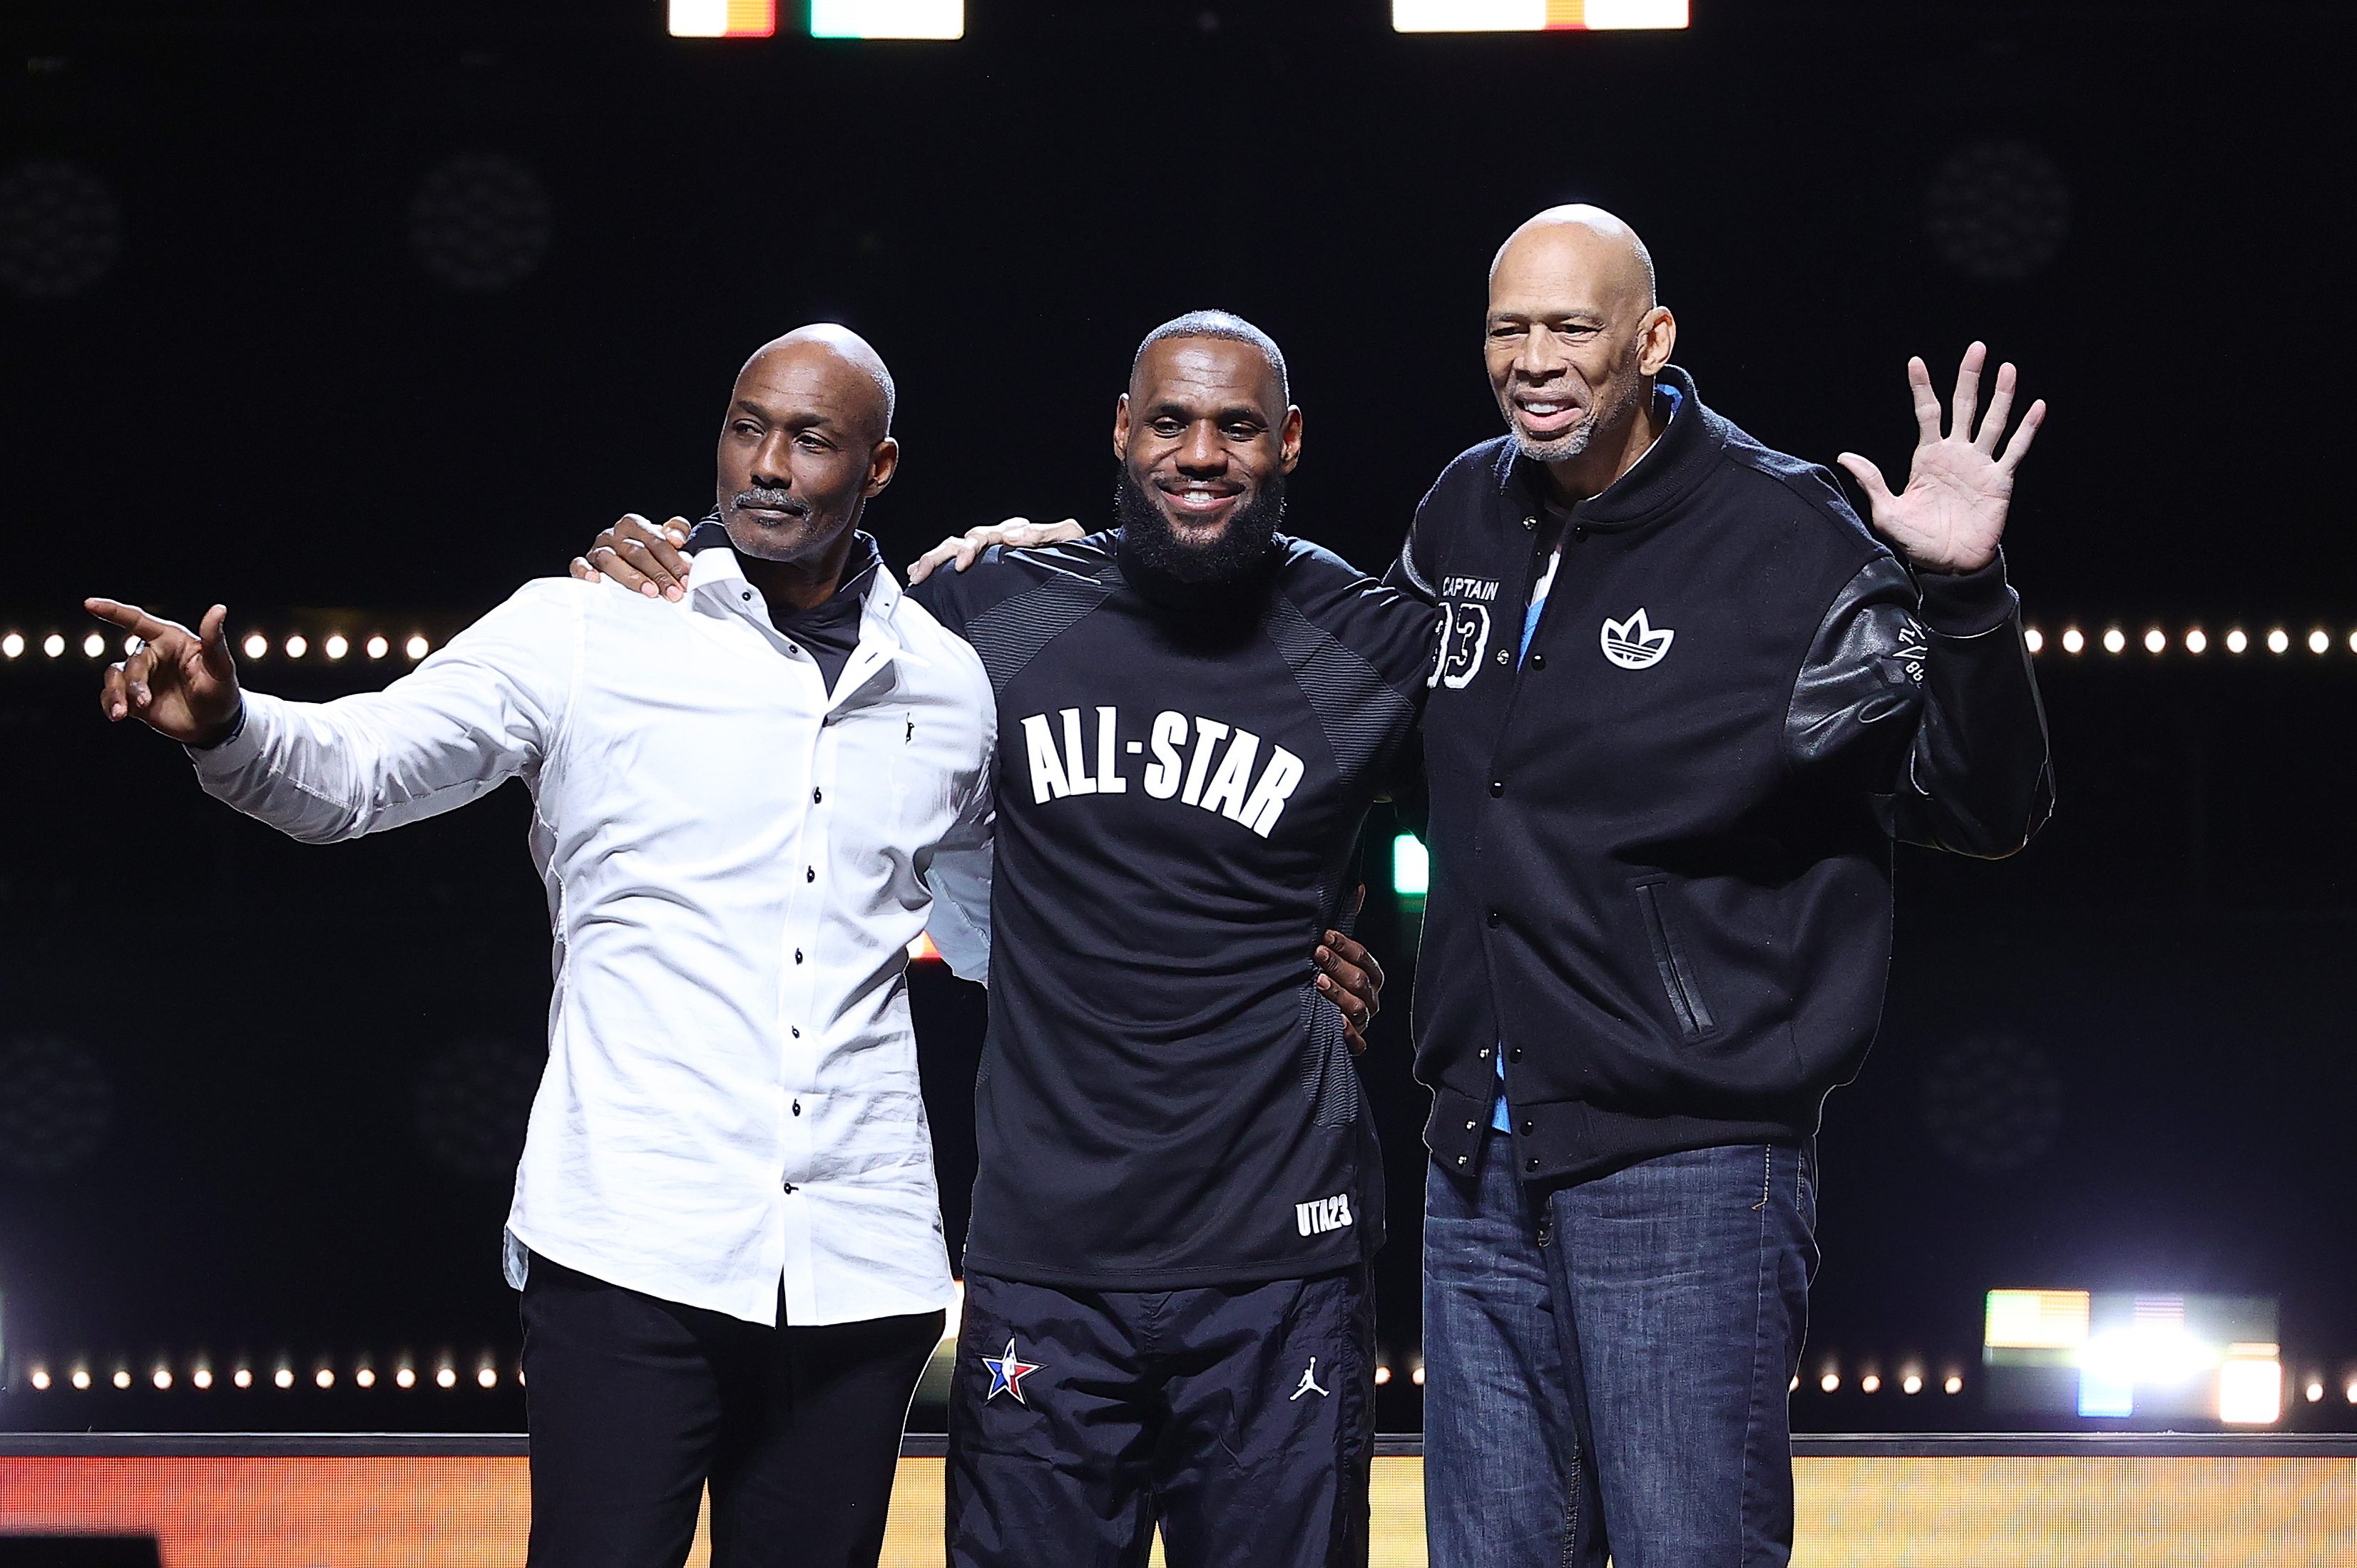 Karl Malone, LeBron James and Kareem Abdul-Jabbar at the 2023 NBA All Star Game.